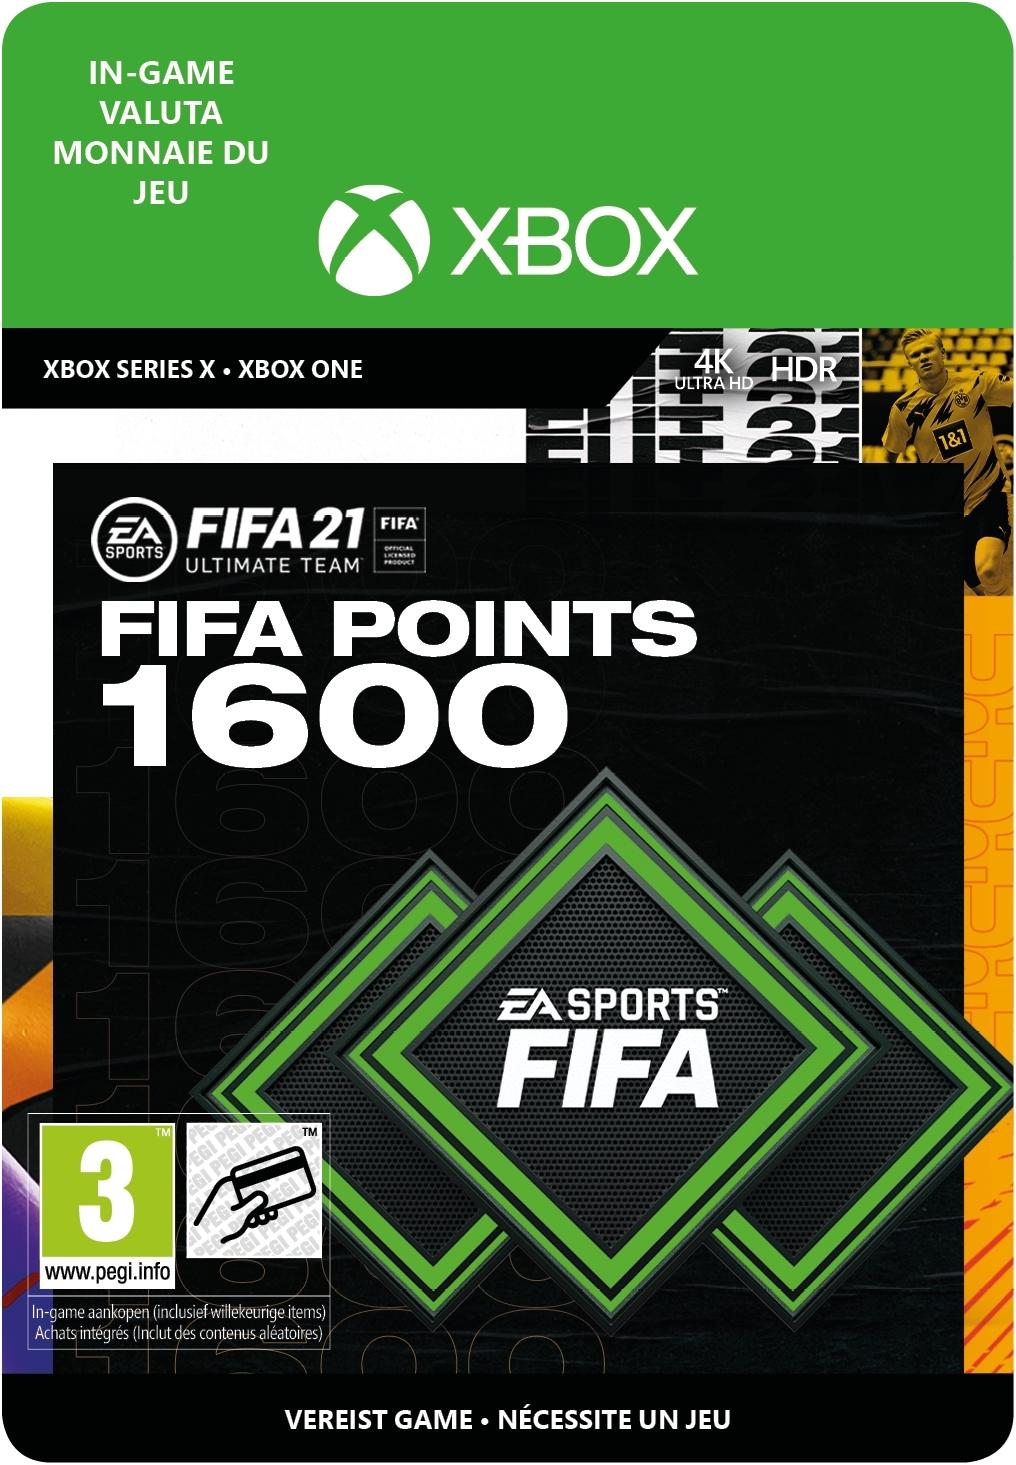 FIFA 21 Ultimate Team 1600 Points - Xbox One - Currency - Niet beschikbaar in Belgie | 7F6-00310 (4114c773-0d86-c040-a5f1-fbeb79c87850)